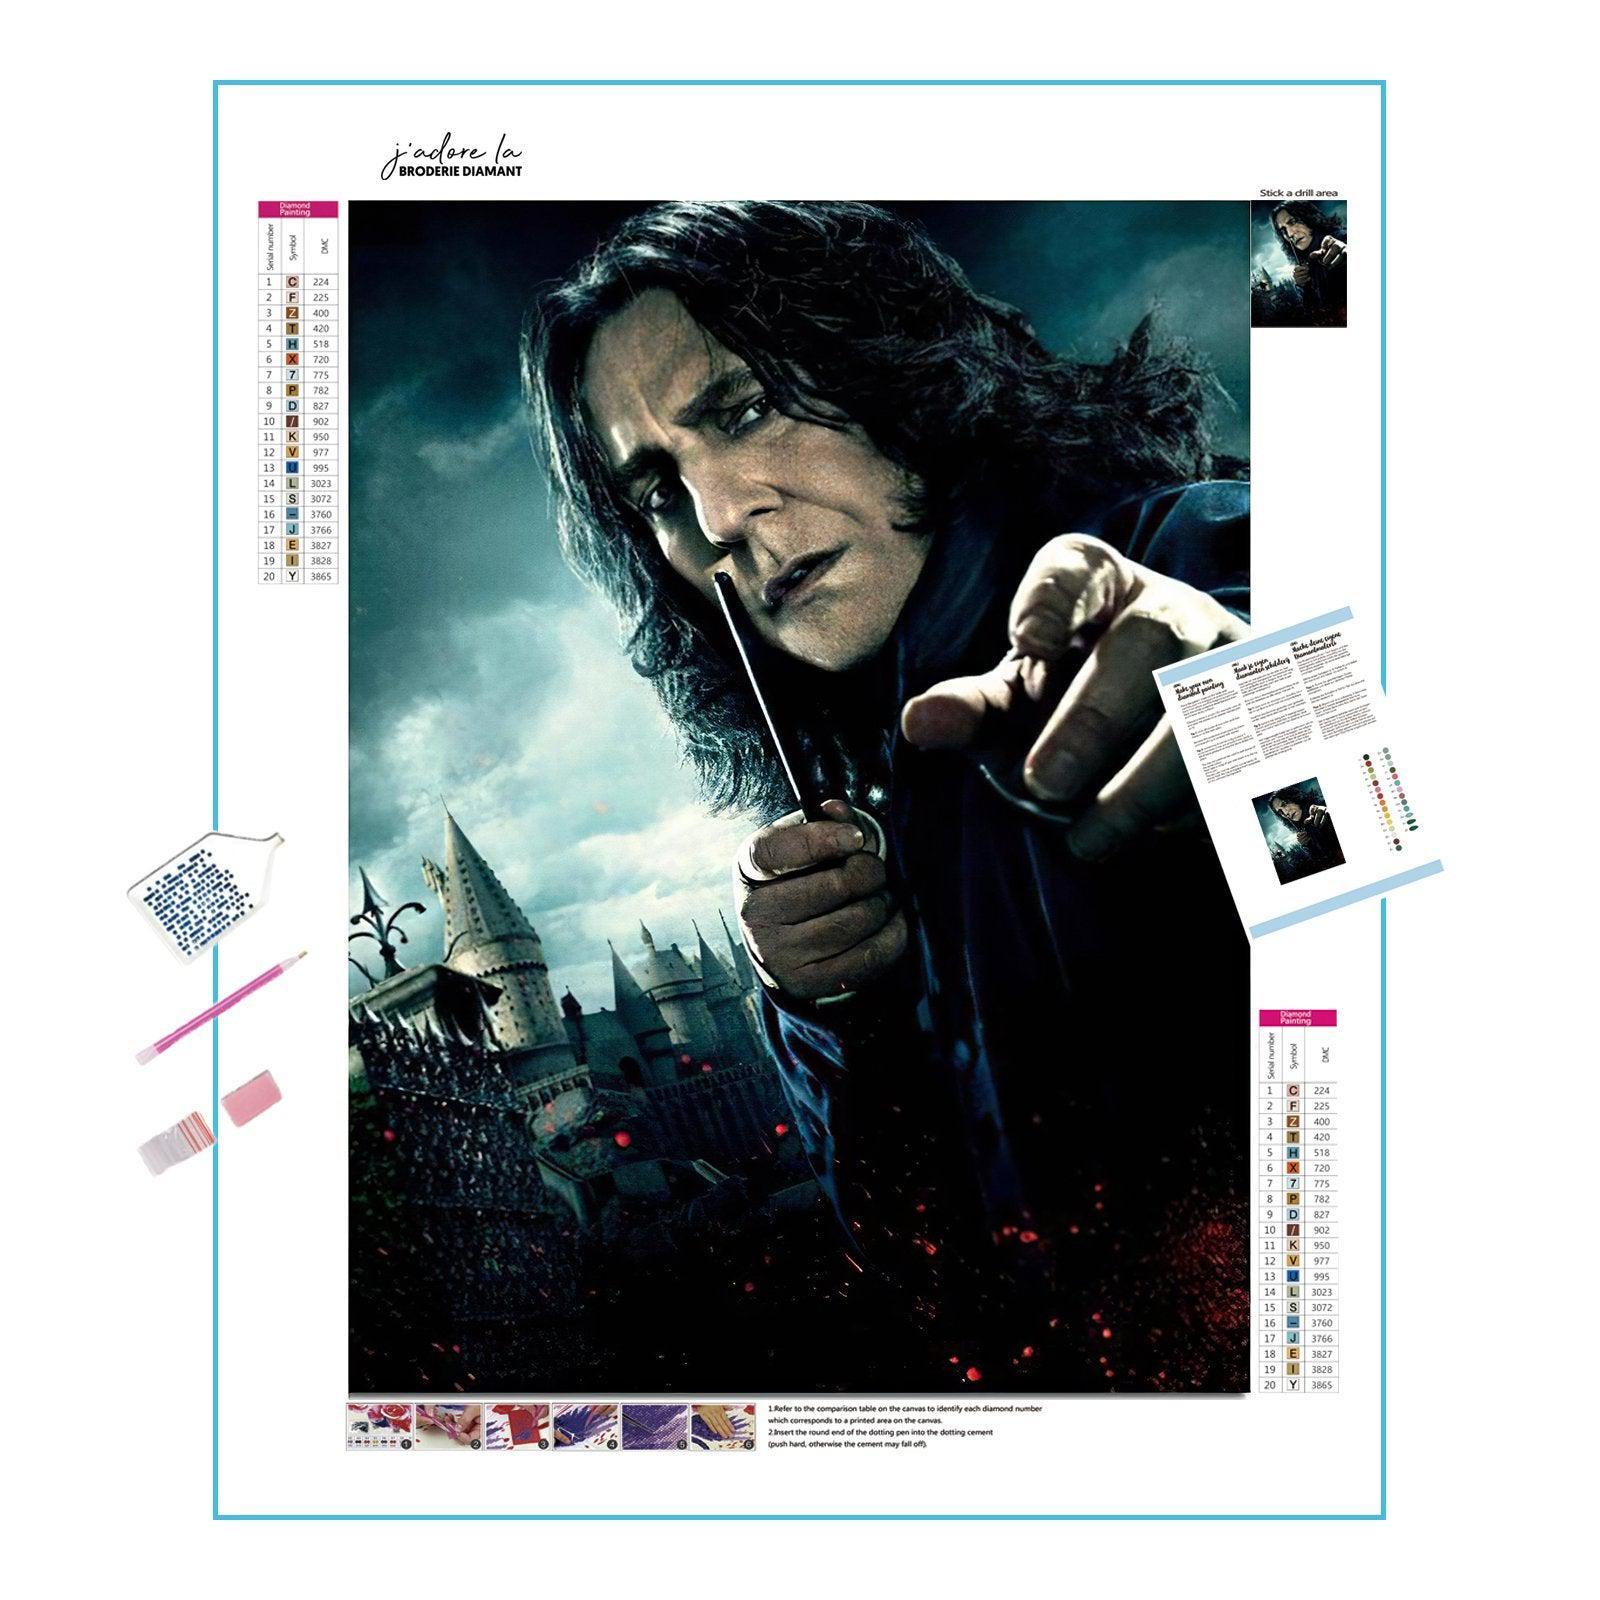 Professor Severus Rogue Of Harry Potter